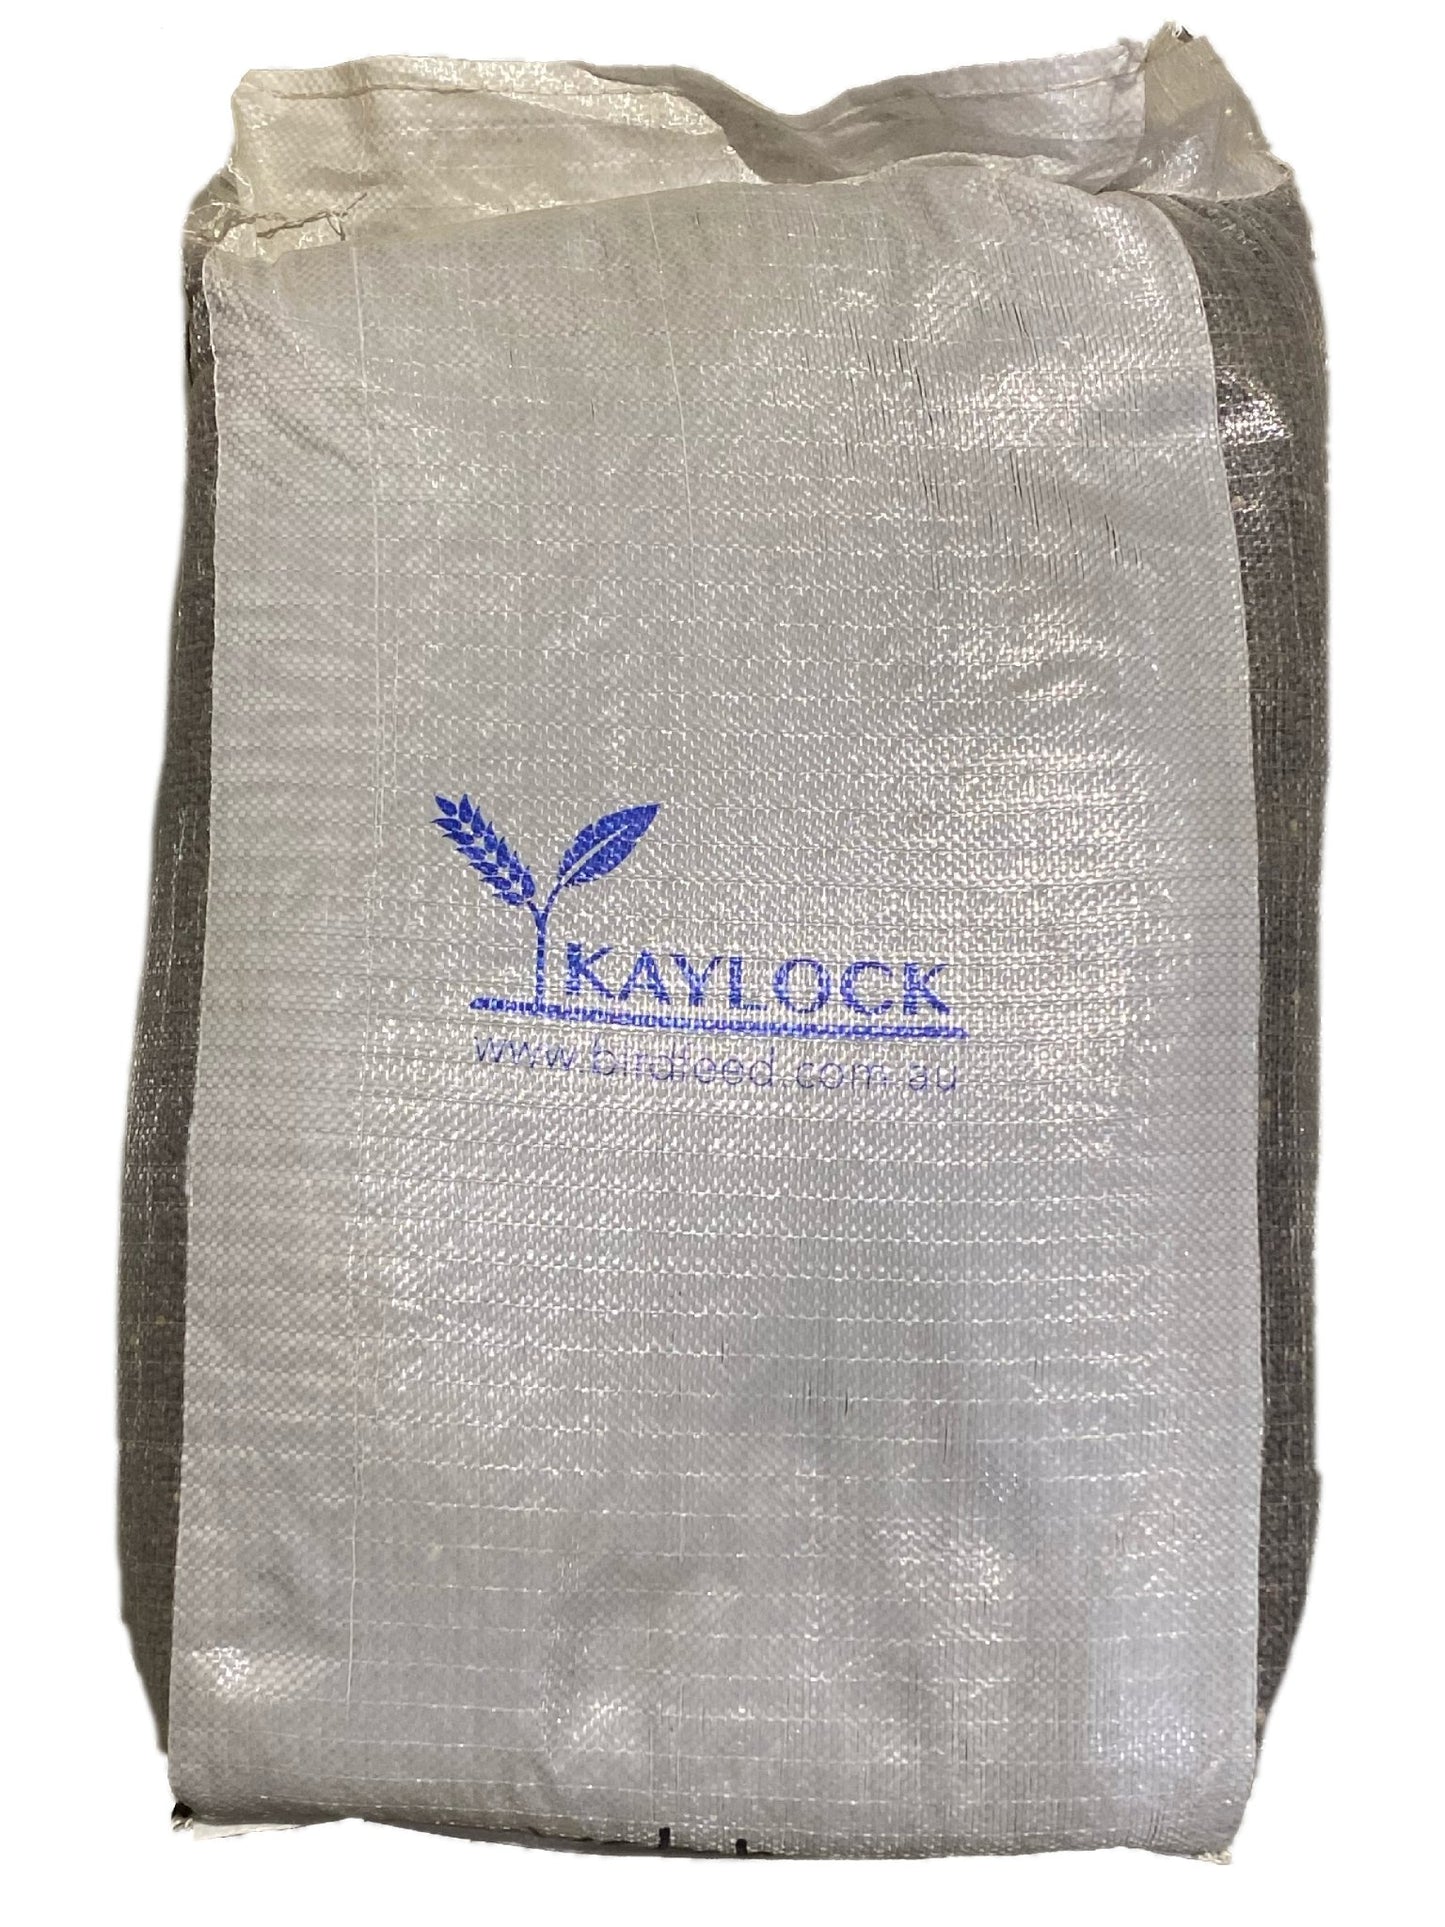 Vetch 20kg Kaylock Grains - Woonona Petfood & Produce